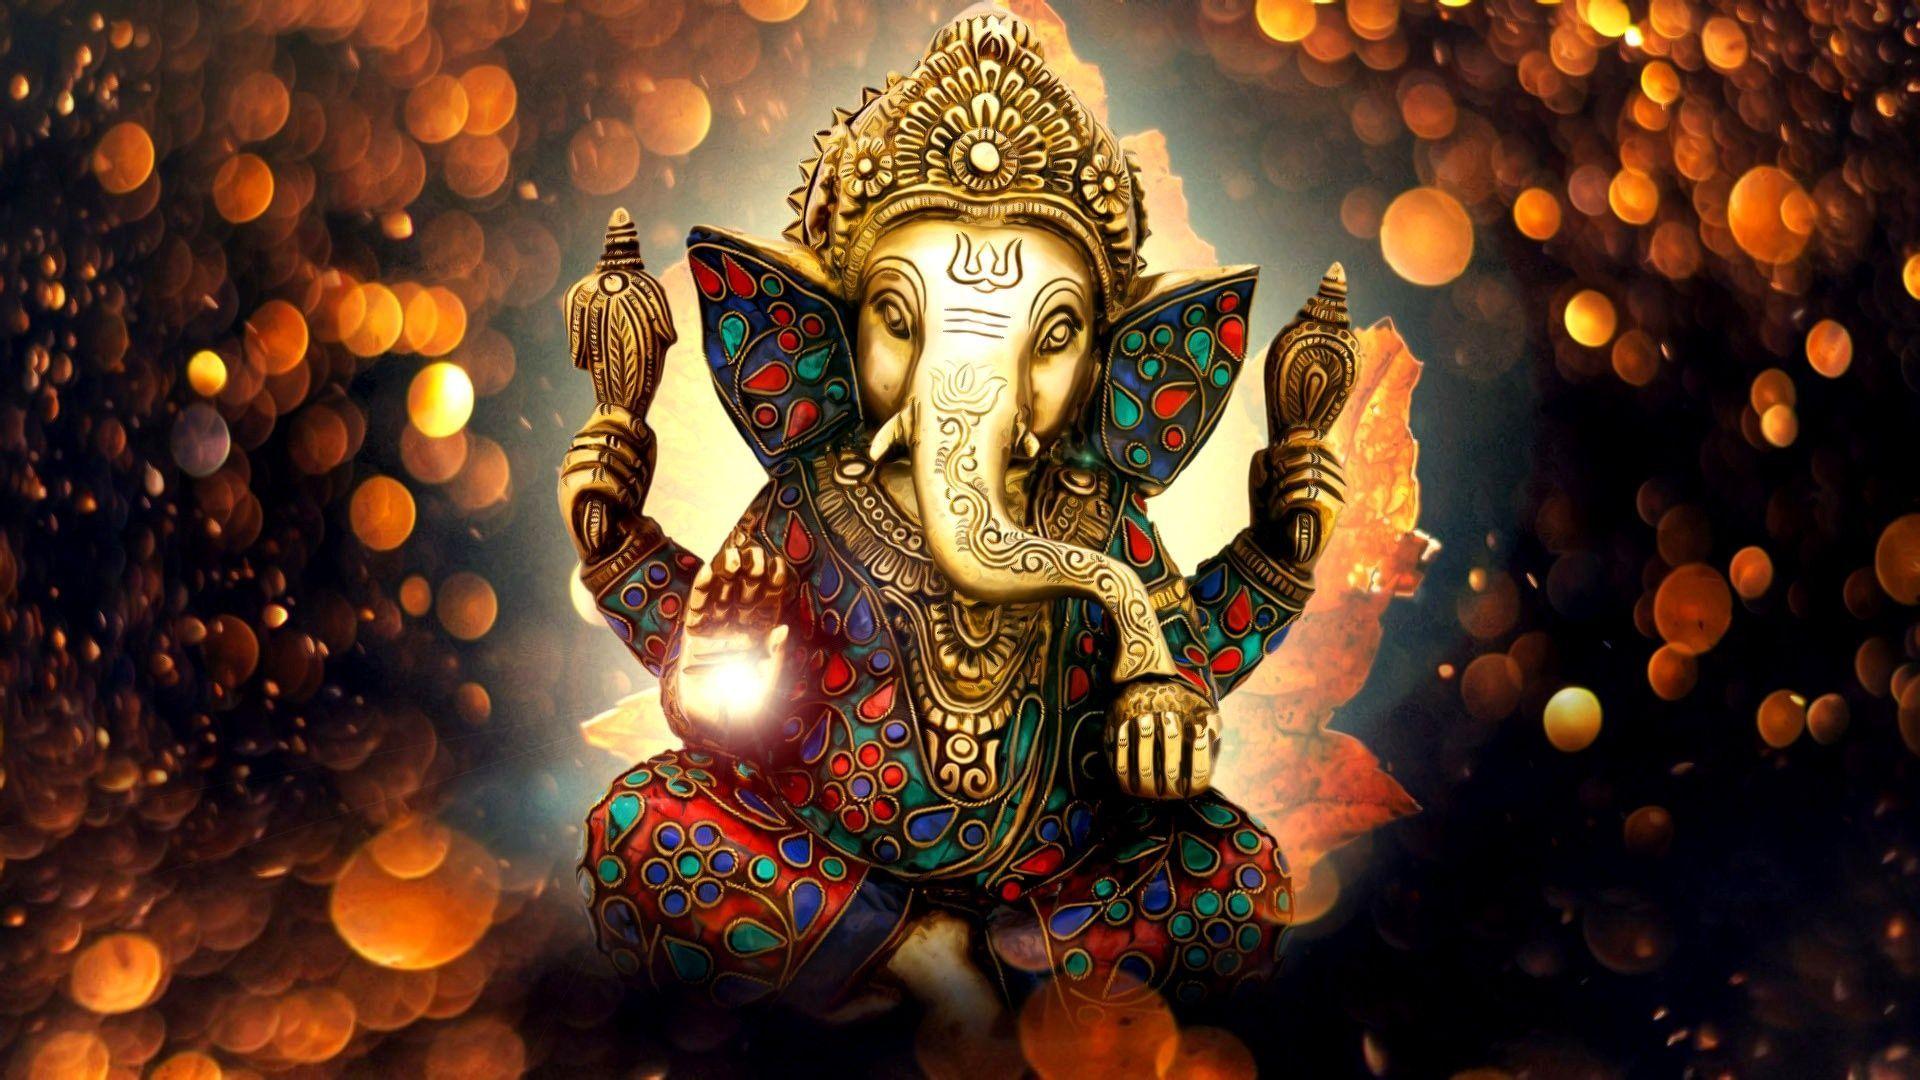 660 Lord Ganesha HD WallpapersImages 1080p 511x682 2023